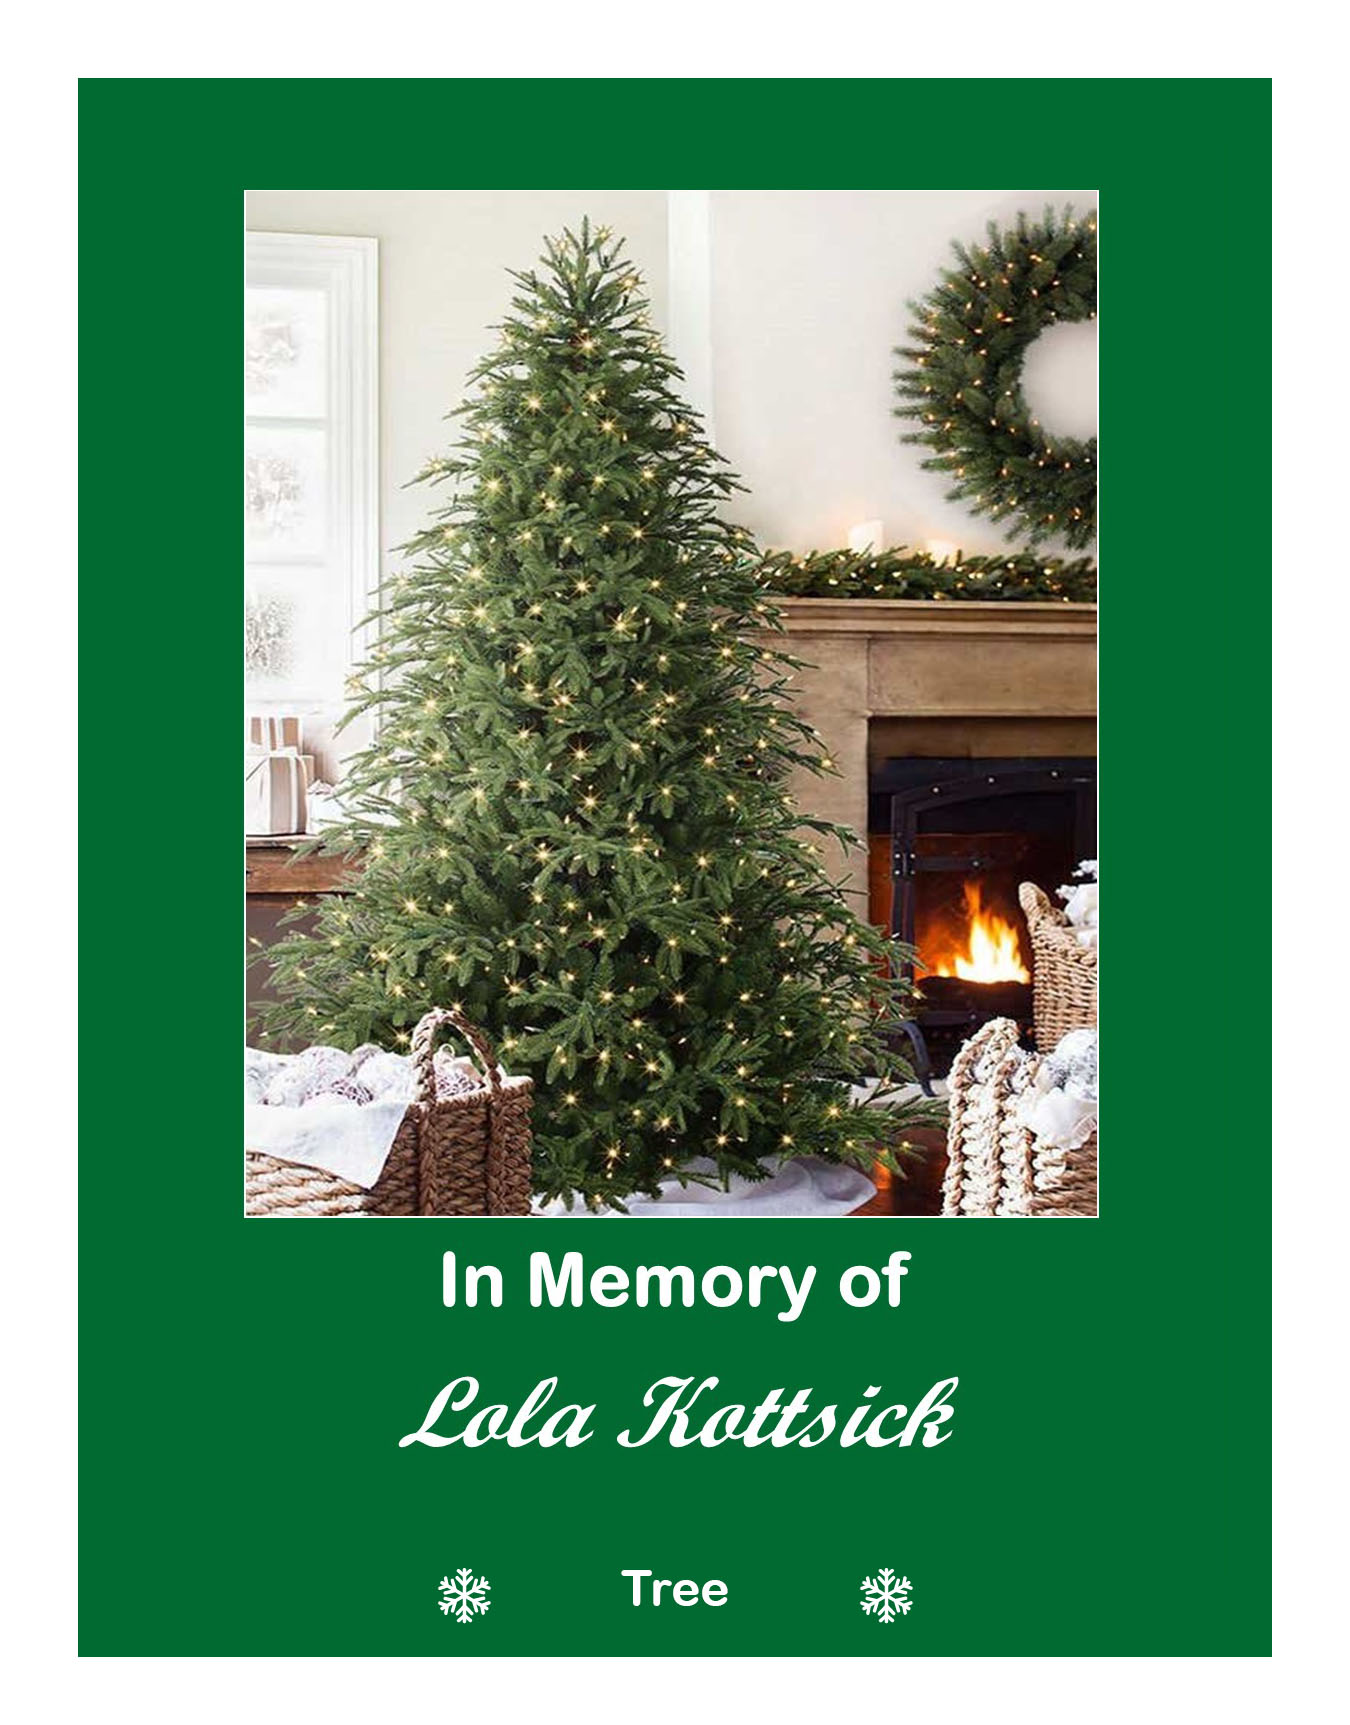 In memory of Lola Kottsick